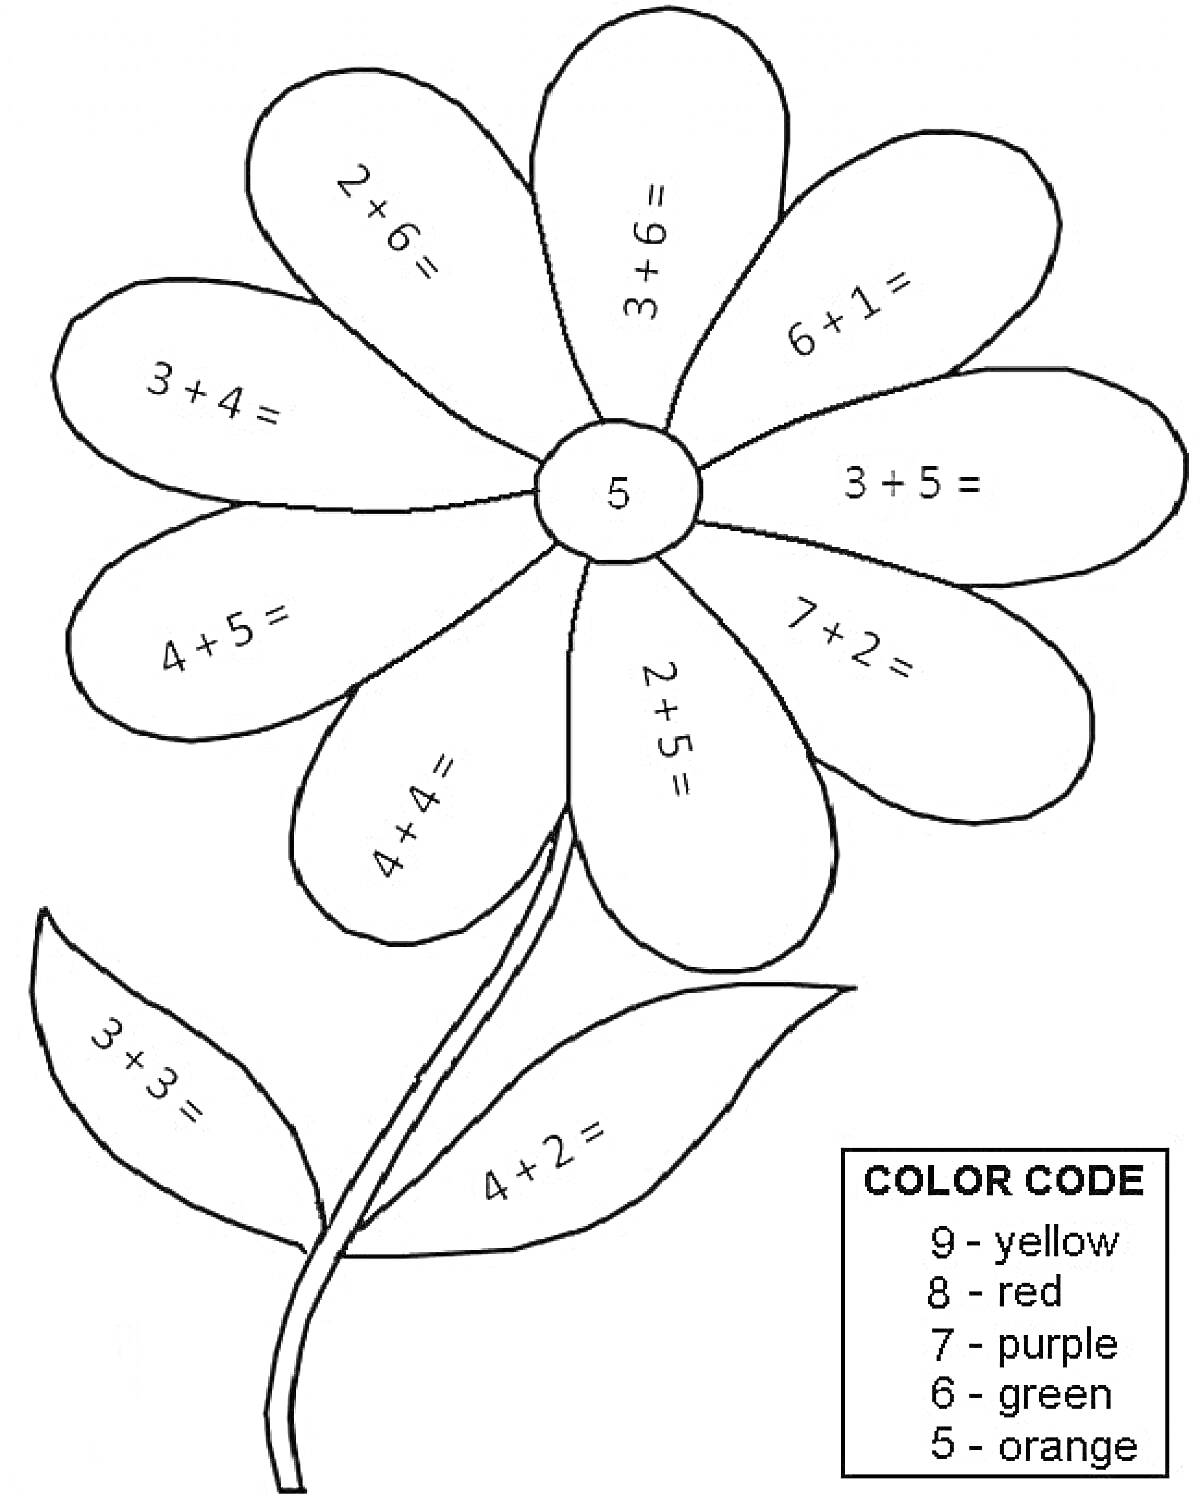 Раскраска Раскраска с цветком и математическими примерами на лепестках